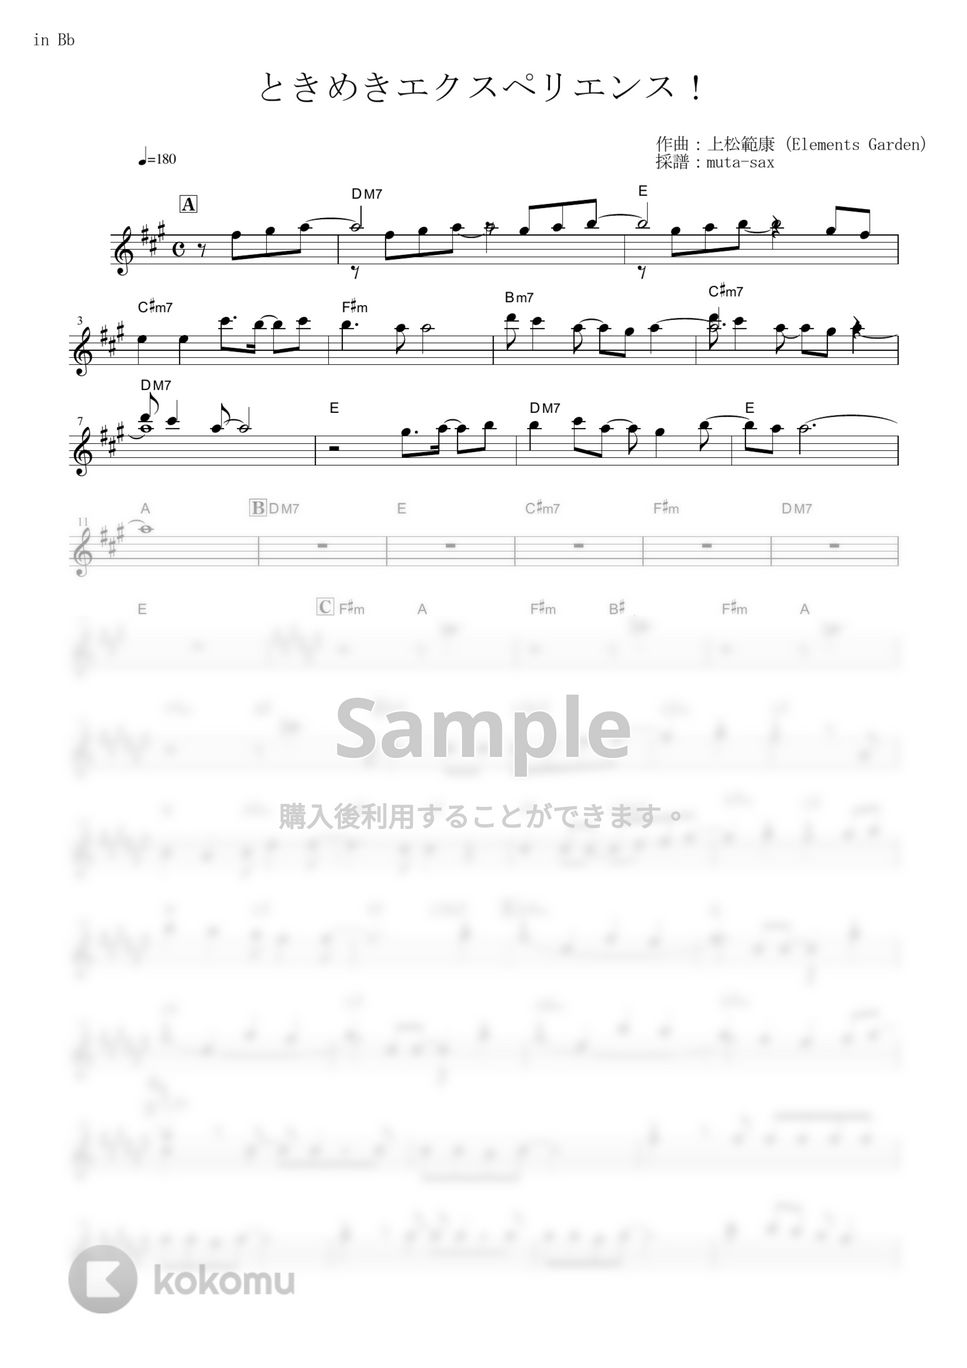 BanG Dream! - ときめきエクスペリエンス!【in Bb】 by muta-sax